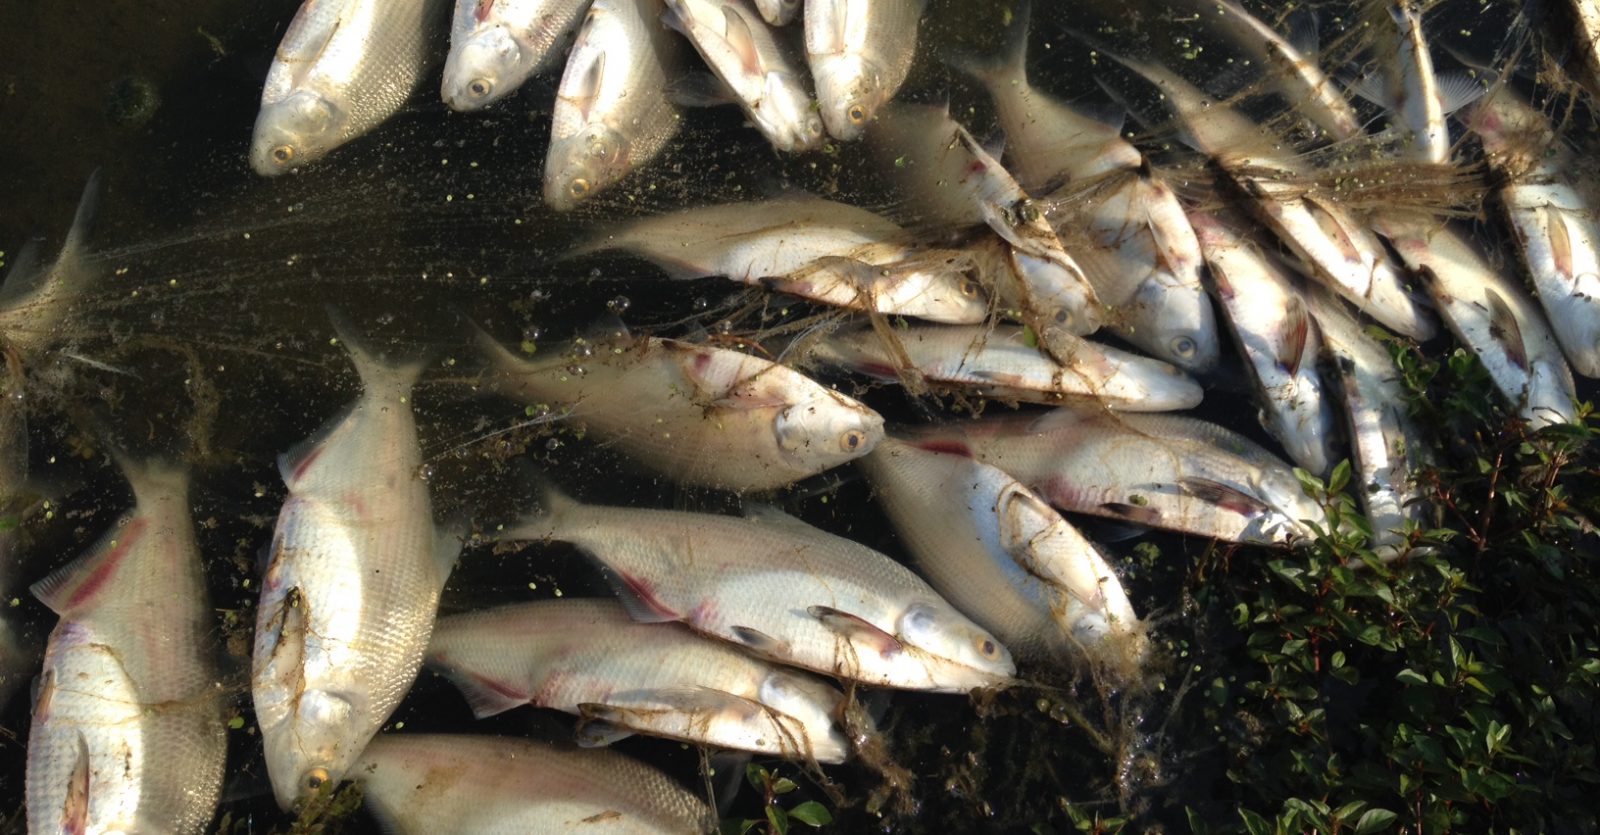 fish kill nuisance pond animals invasive species fisheries management fisheries plan